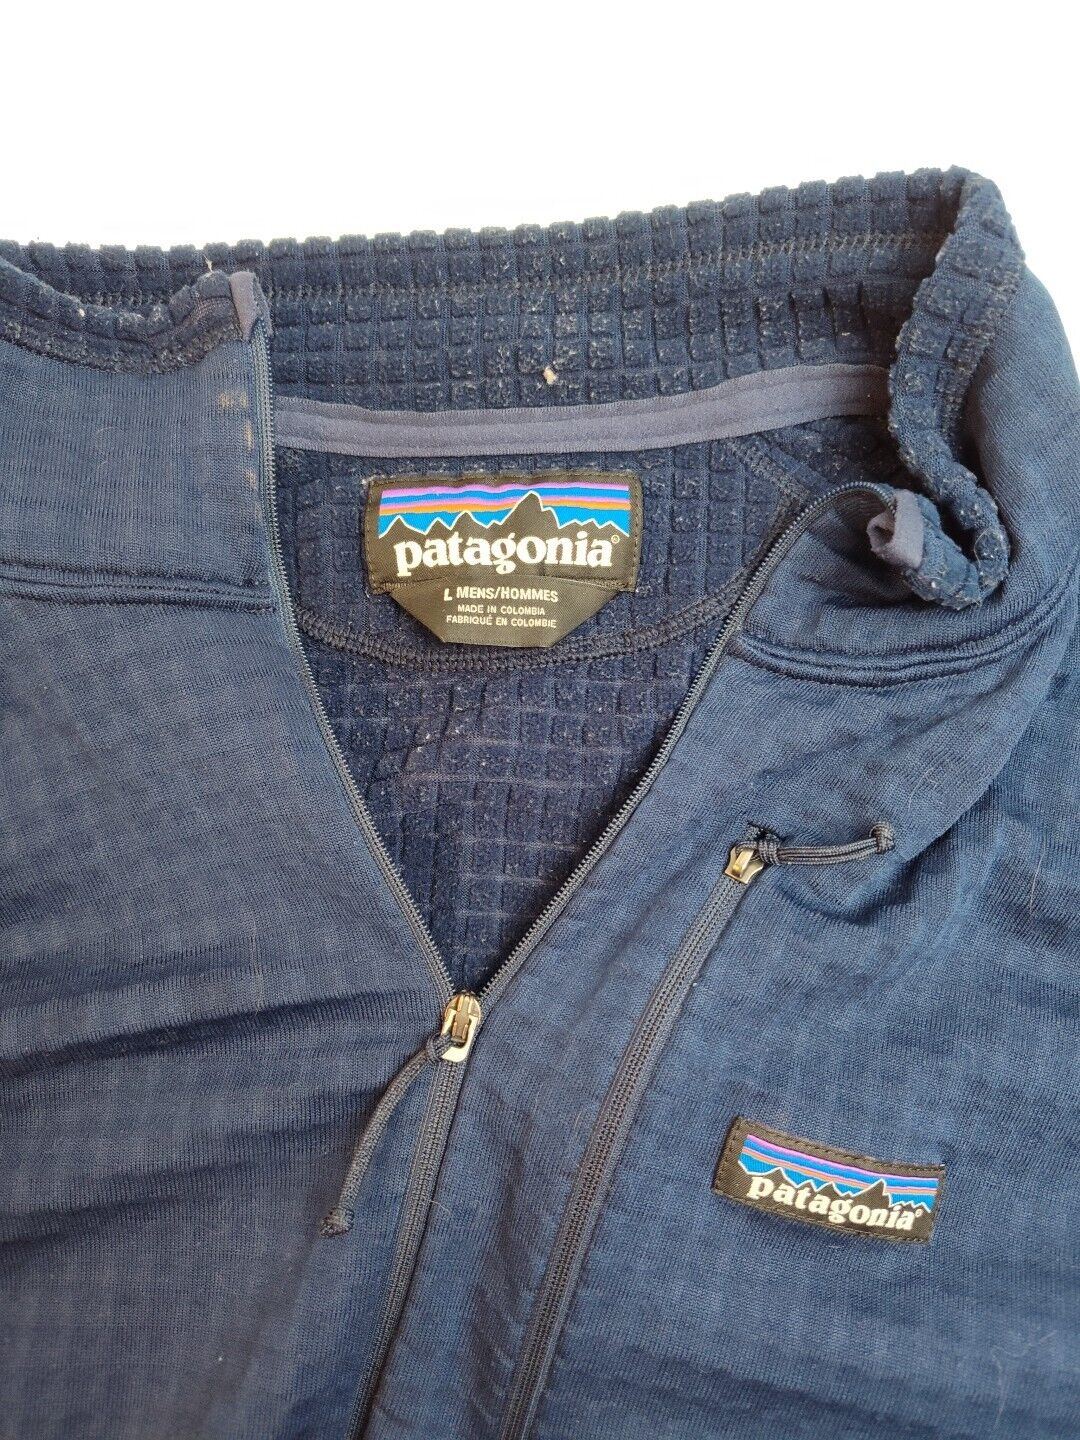 Patagonia Regulator Pullover Adult Men's Large Bl… - image 10